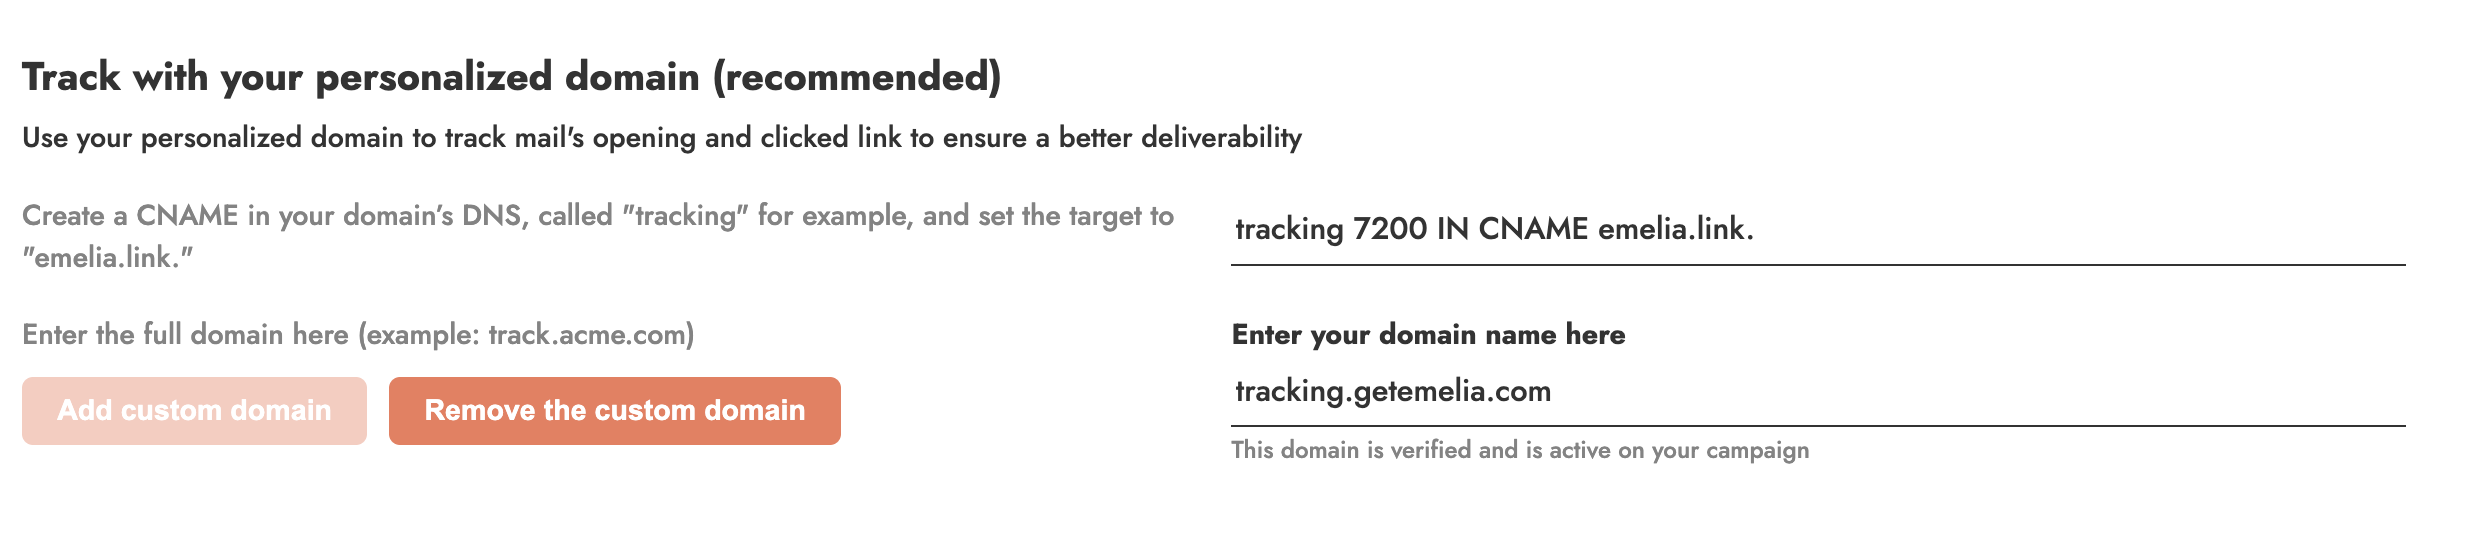 tracking domain